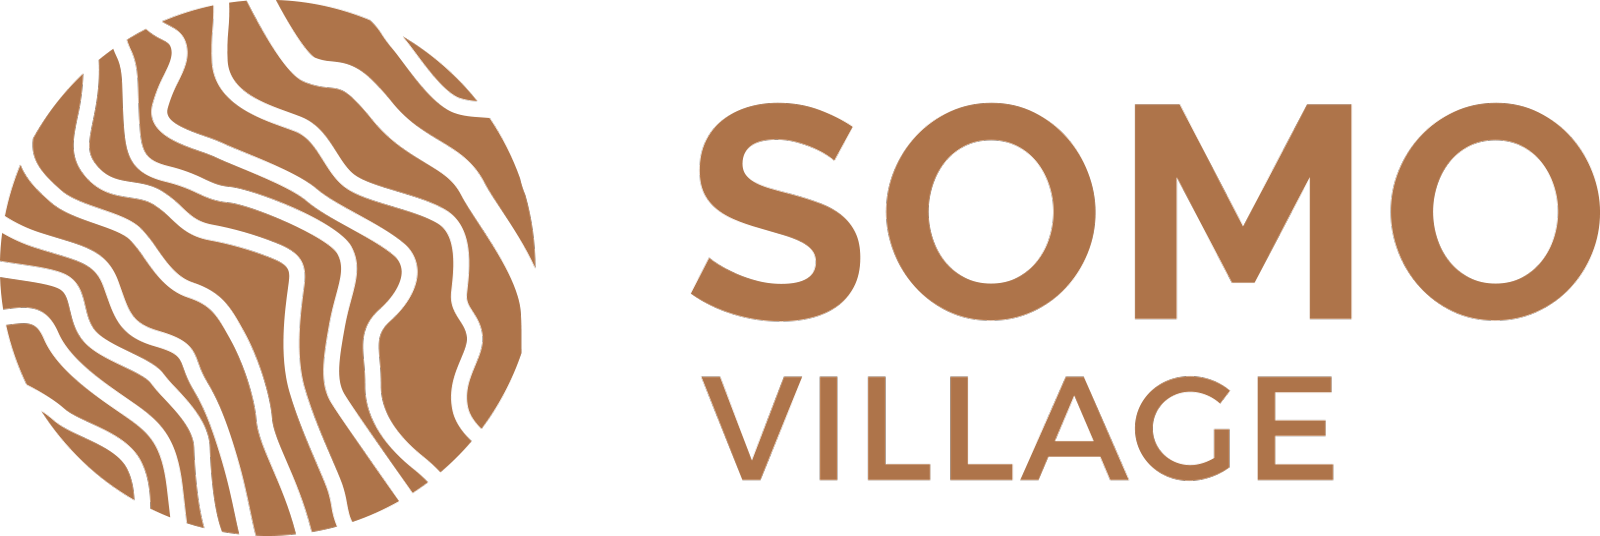 SOMO Village logo